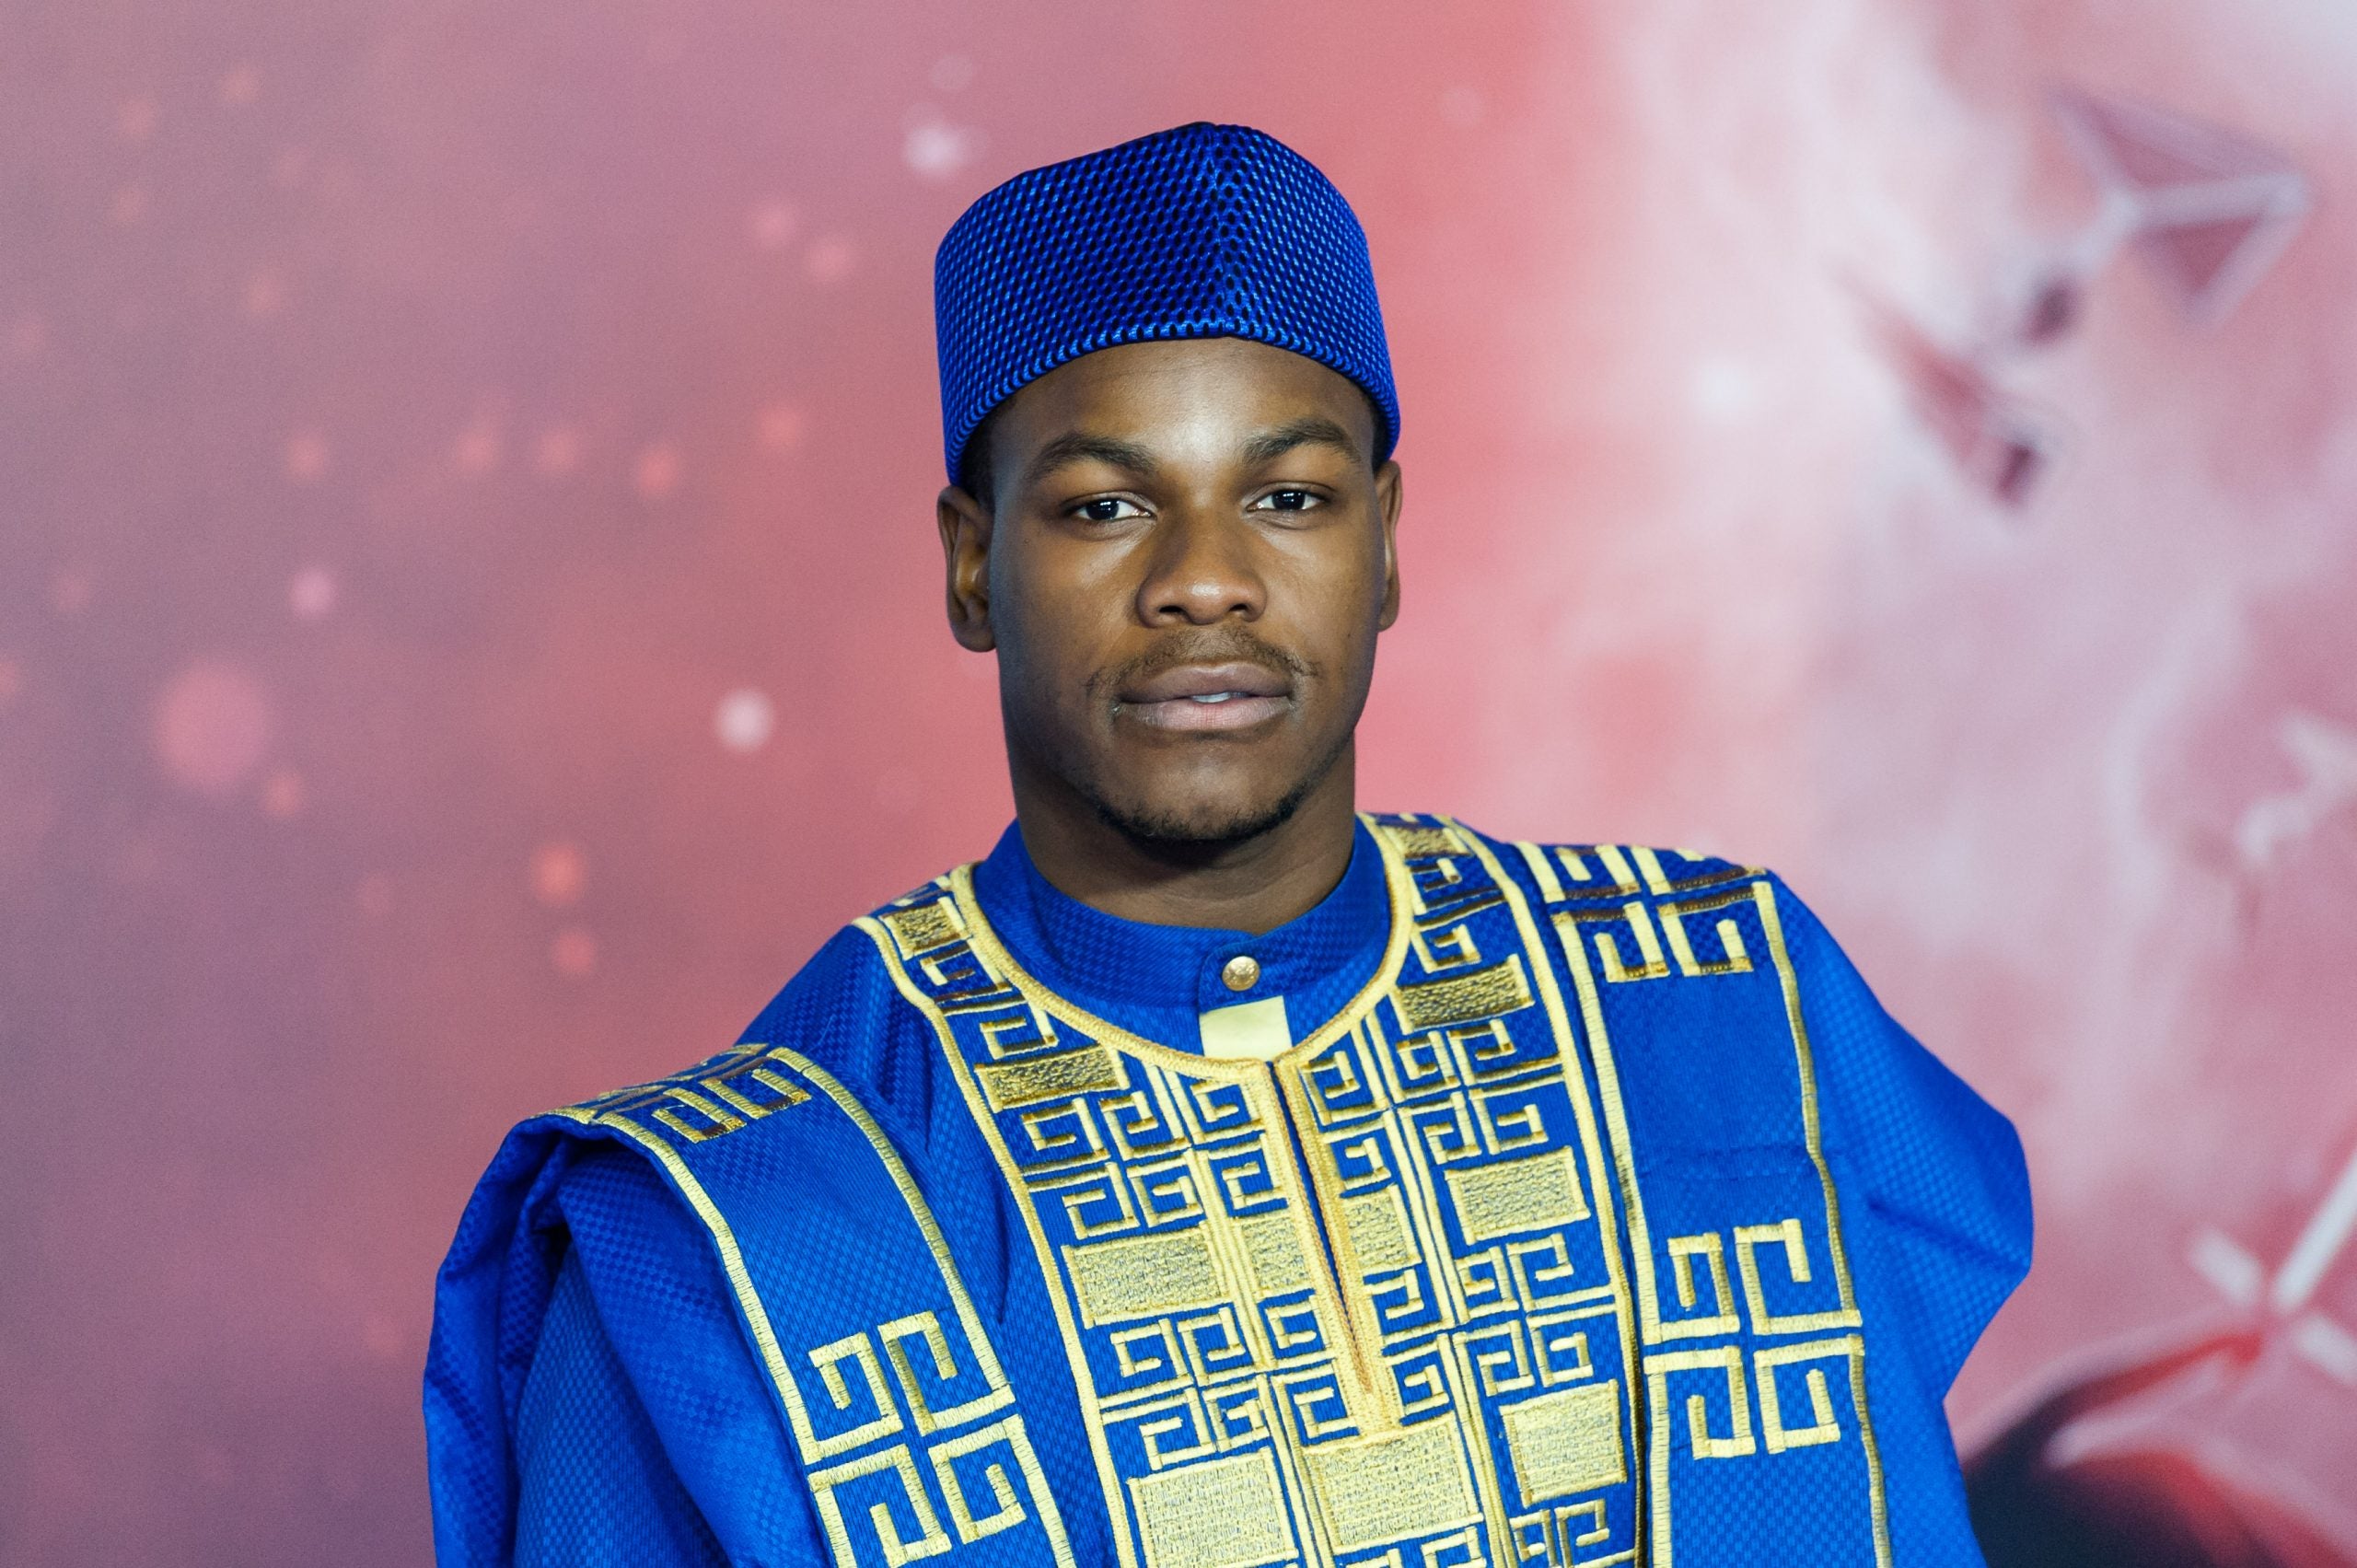 John Boyega And Viola Davis to Star in Dahomey Empire Drama, “The Woman King”